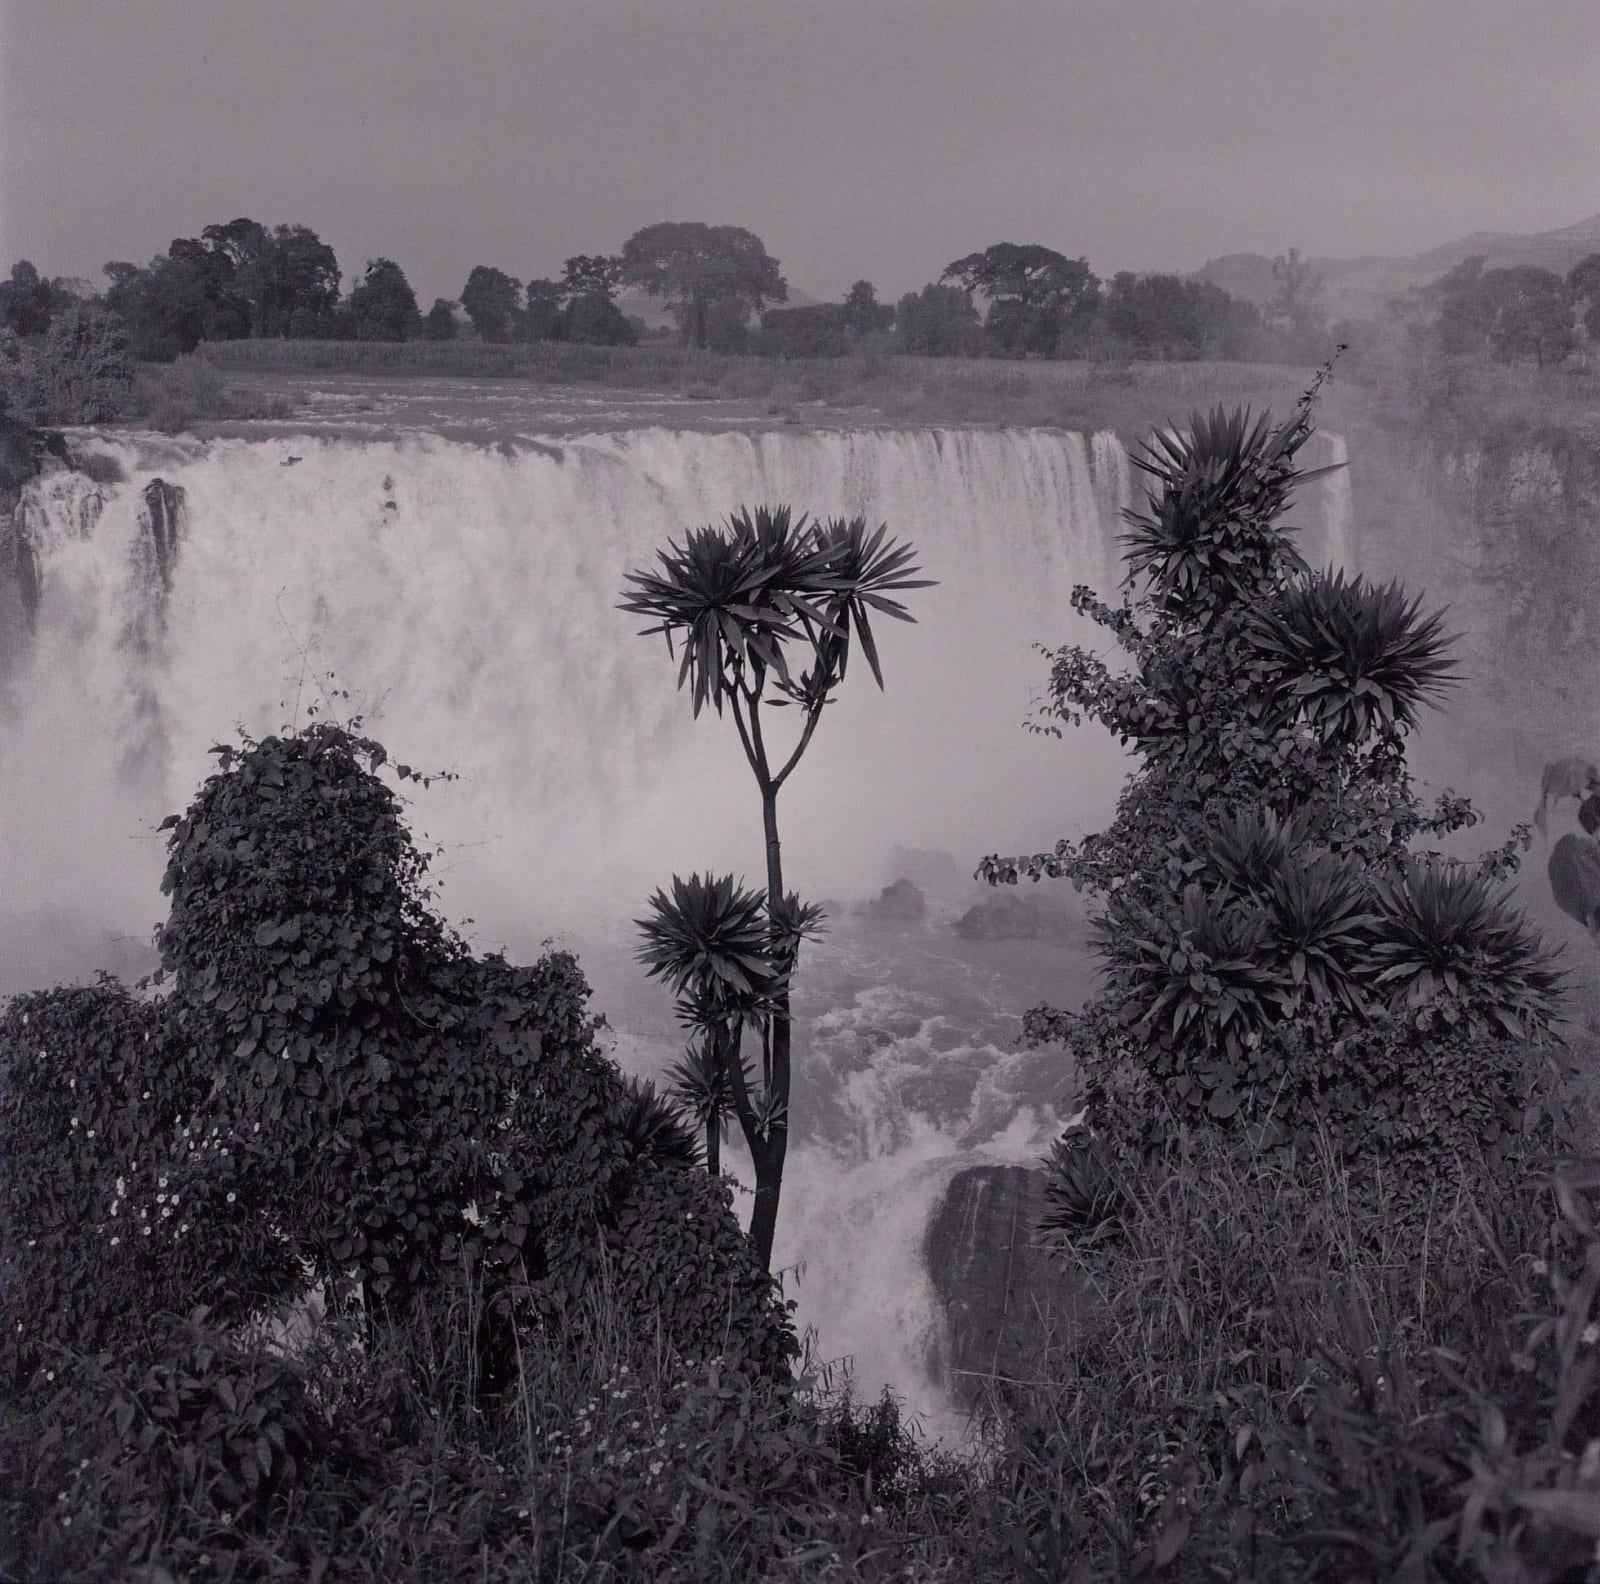 Lynn Davis, Blue Nile Falls, Tissisat Falls, Ethiopia, 1997